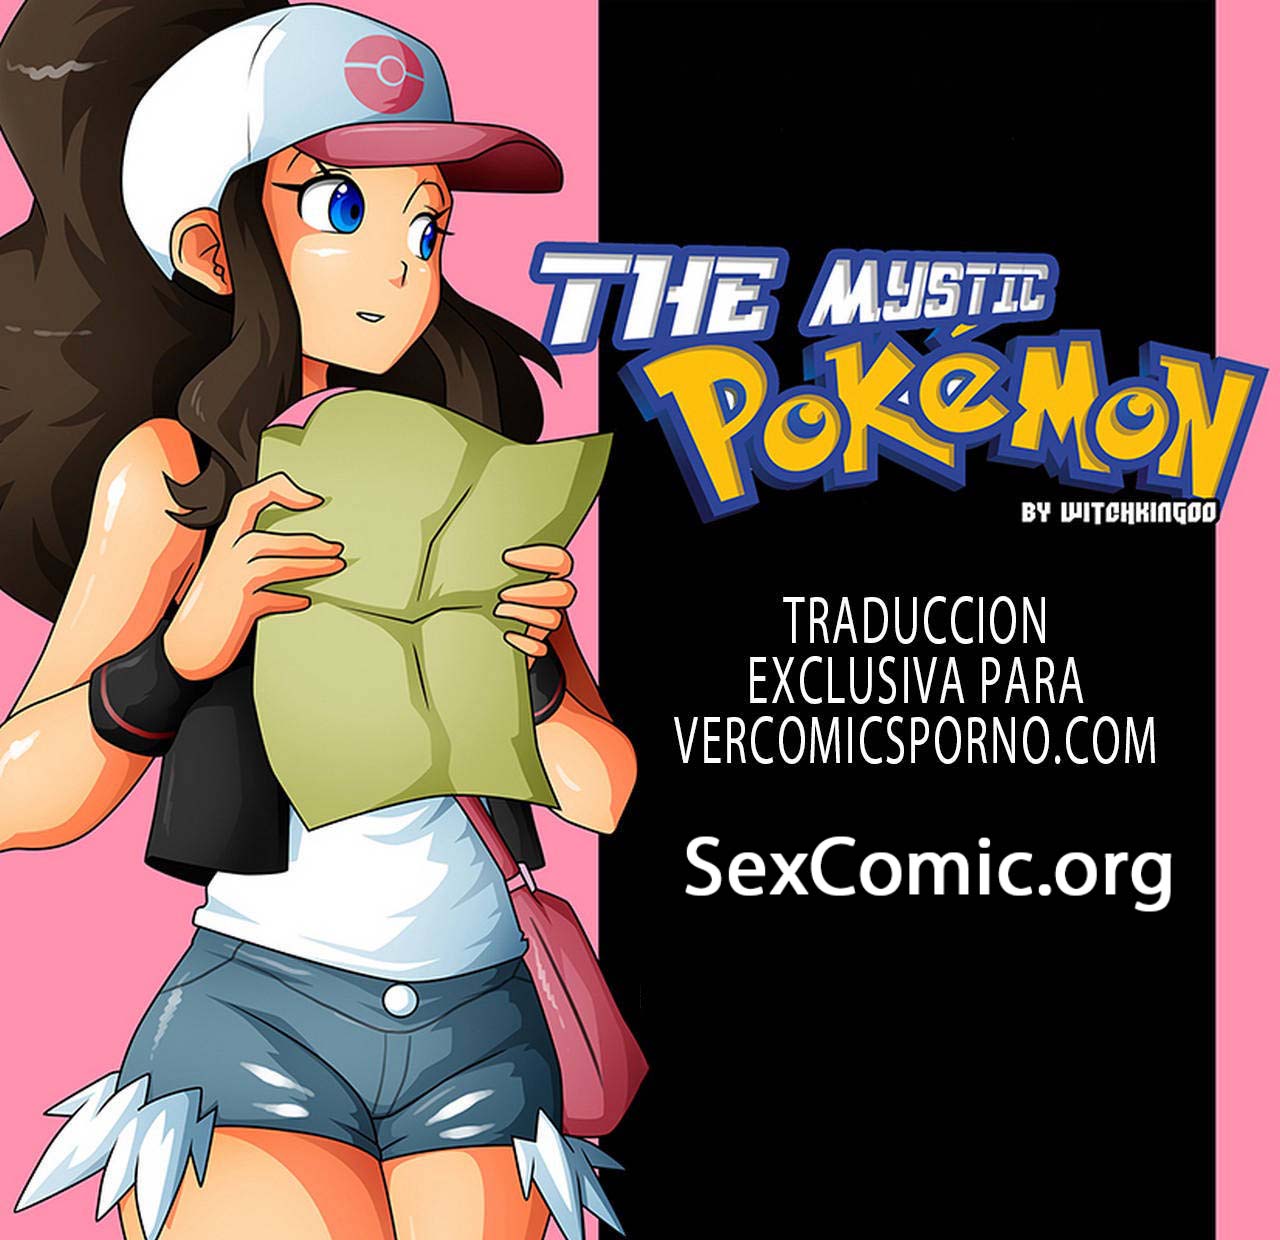 Mystic Pokemon comic porno - pokemon-porno-comics-sexuales-pokemon-go-sexo (1)